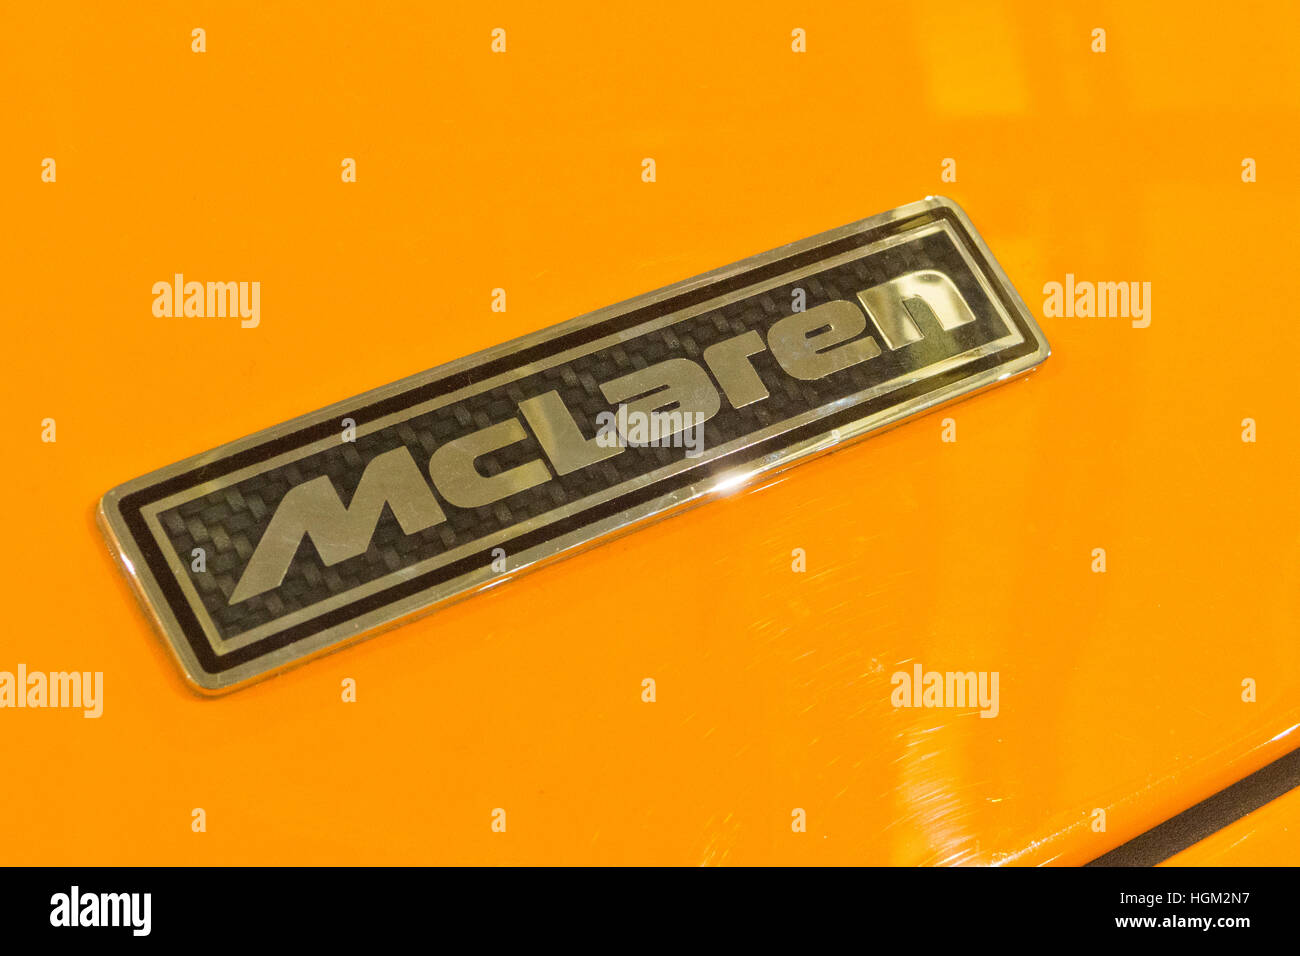 McLaren Name Badge on a McLaren MP4 12C Sports Car Bonnet, UK Stock Photo -  Alamy